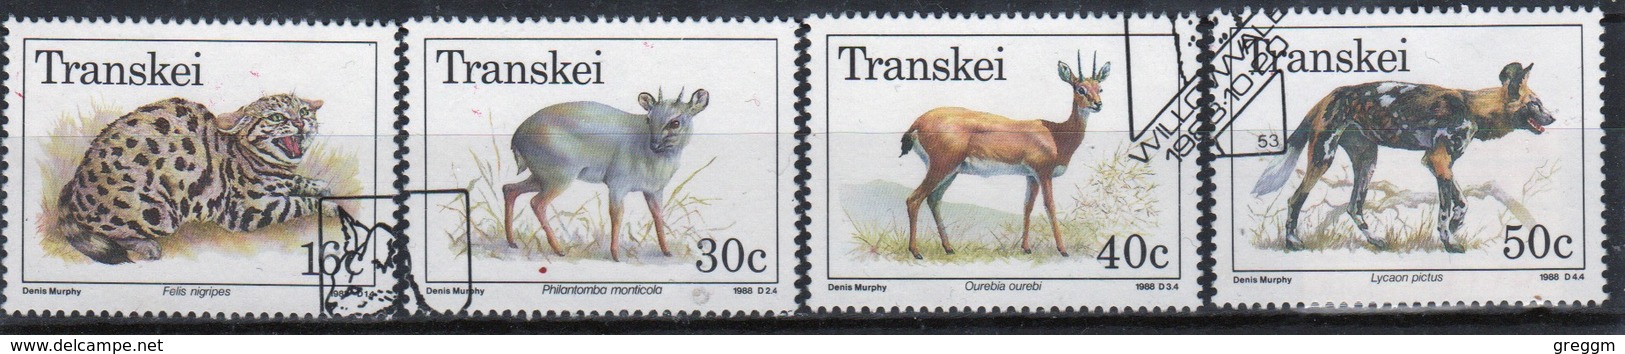 Transkei 1988 Set Of Stamps To Celebrate Endangered Animals. - Transkei